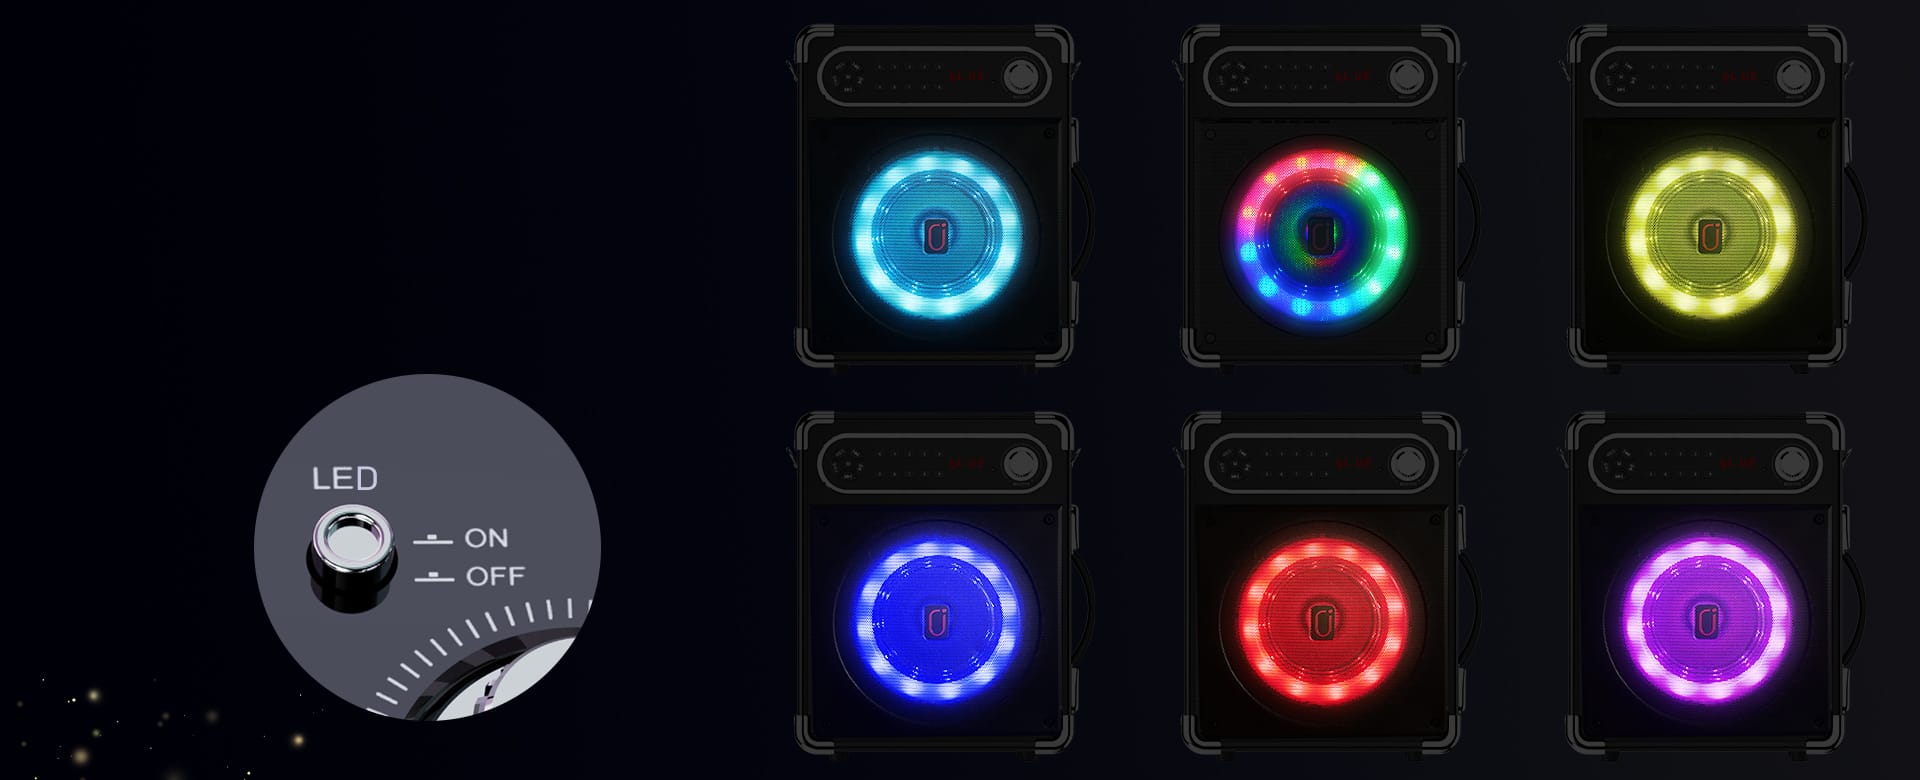 6 light modes and LED light botton of JYX S55 karaoke machine with light